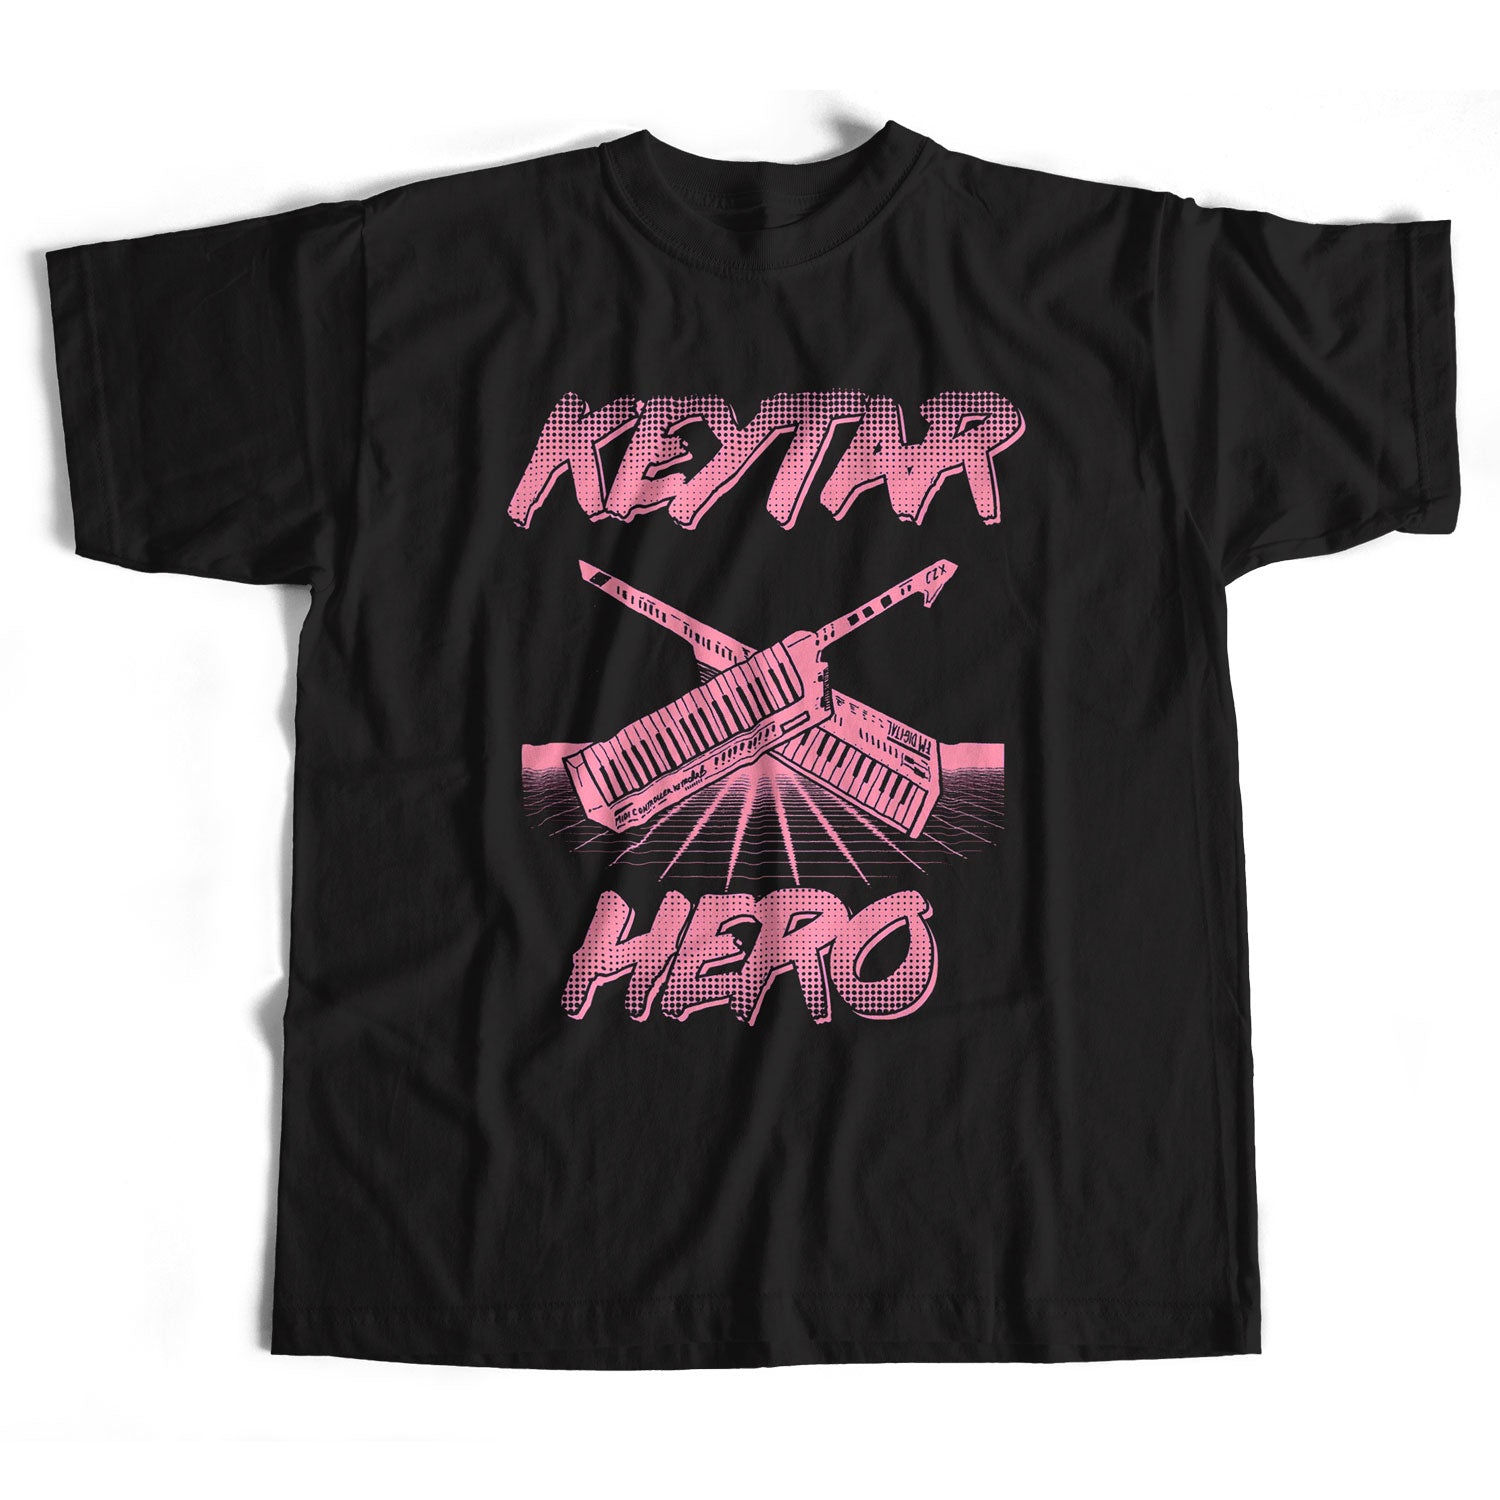 Old Skool Hooligans Keytar Hero T Shirt - An 80's Synth Classic